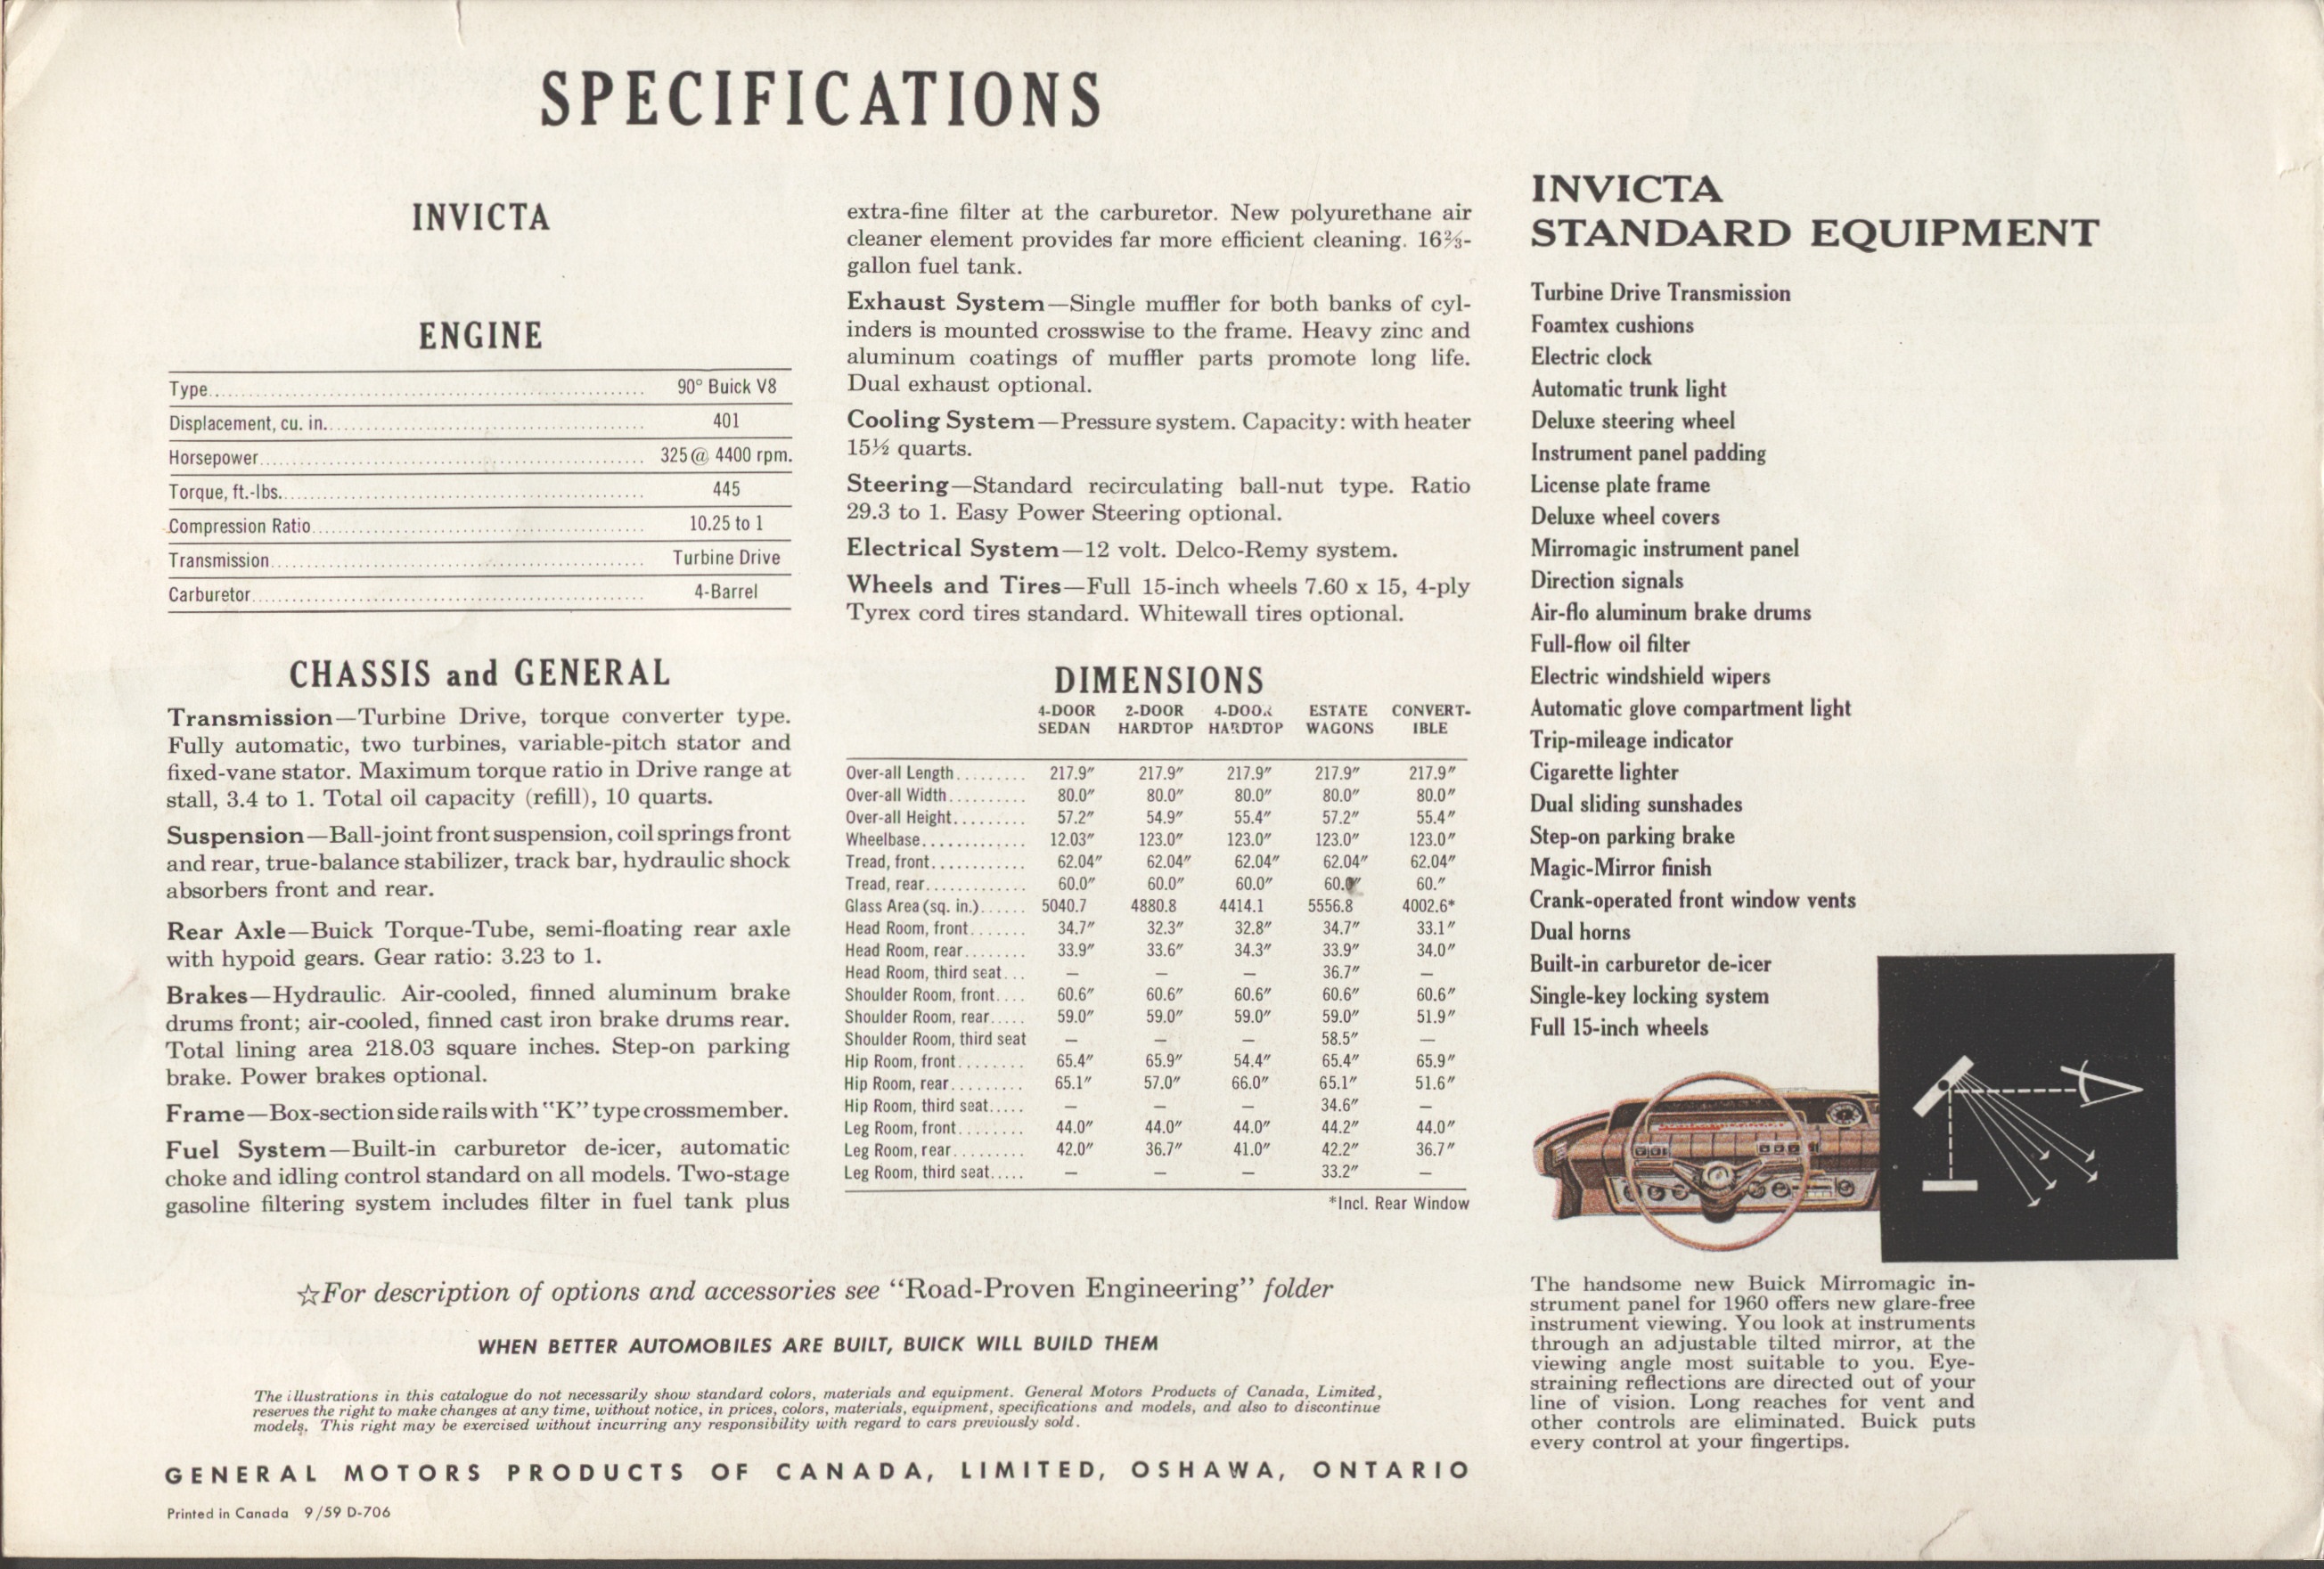 1960 Buick Invicta Foldout (Cdn) 06